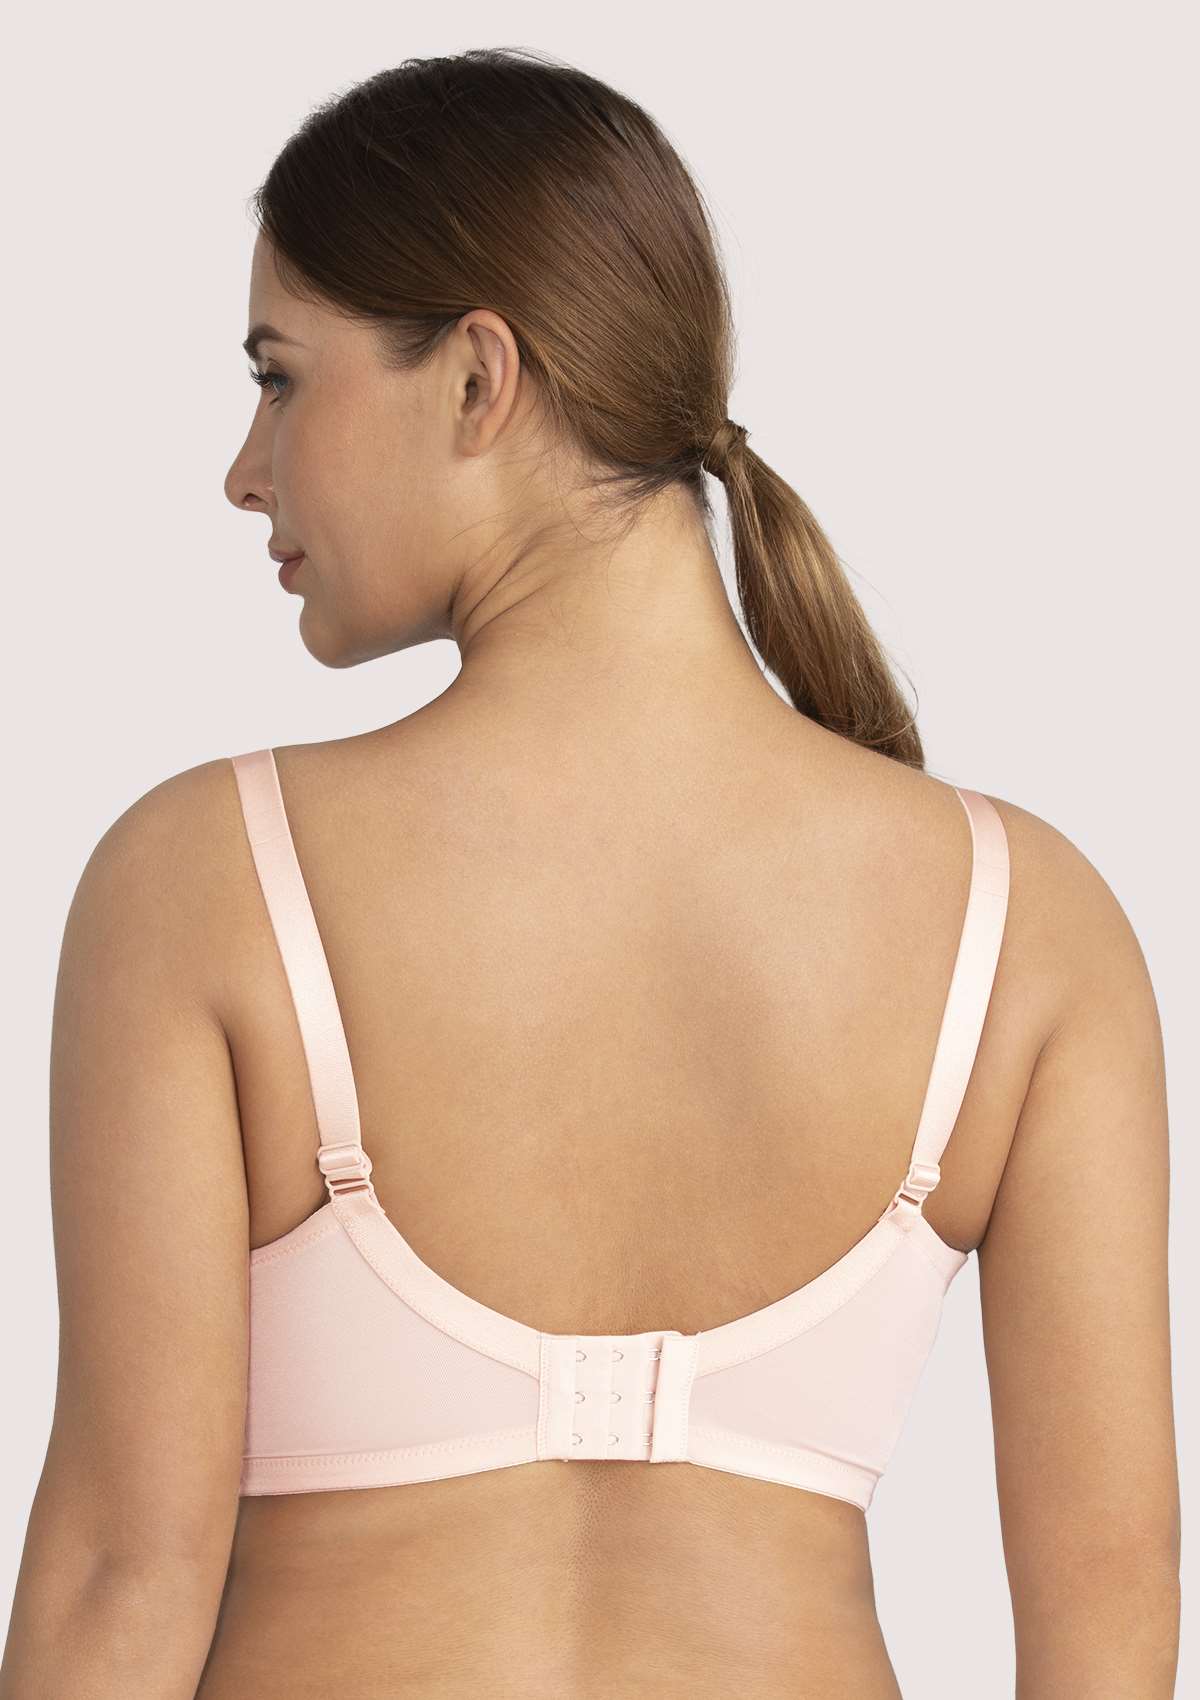 HSIA Sunflower Matching Bra And Panties Set: Comfortable Plus Size Bra - Pink / 42 / C